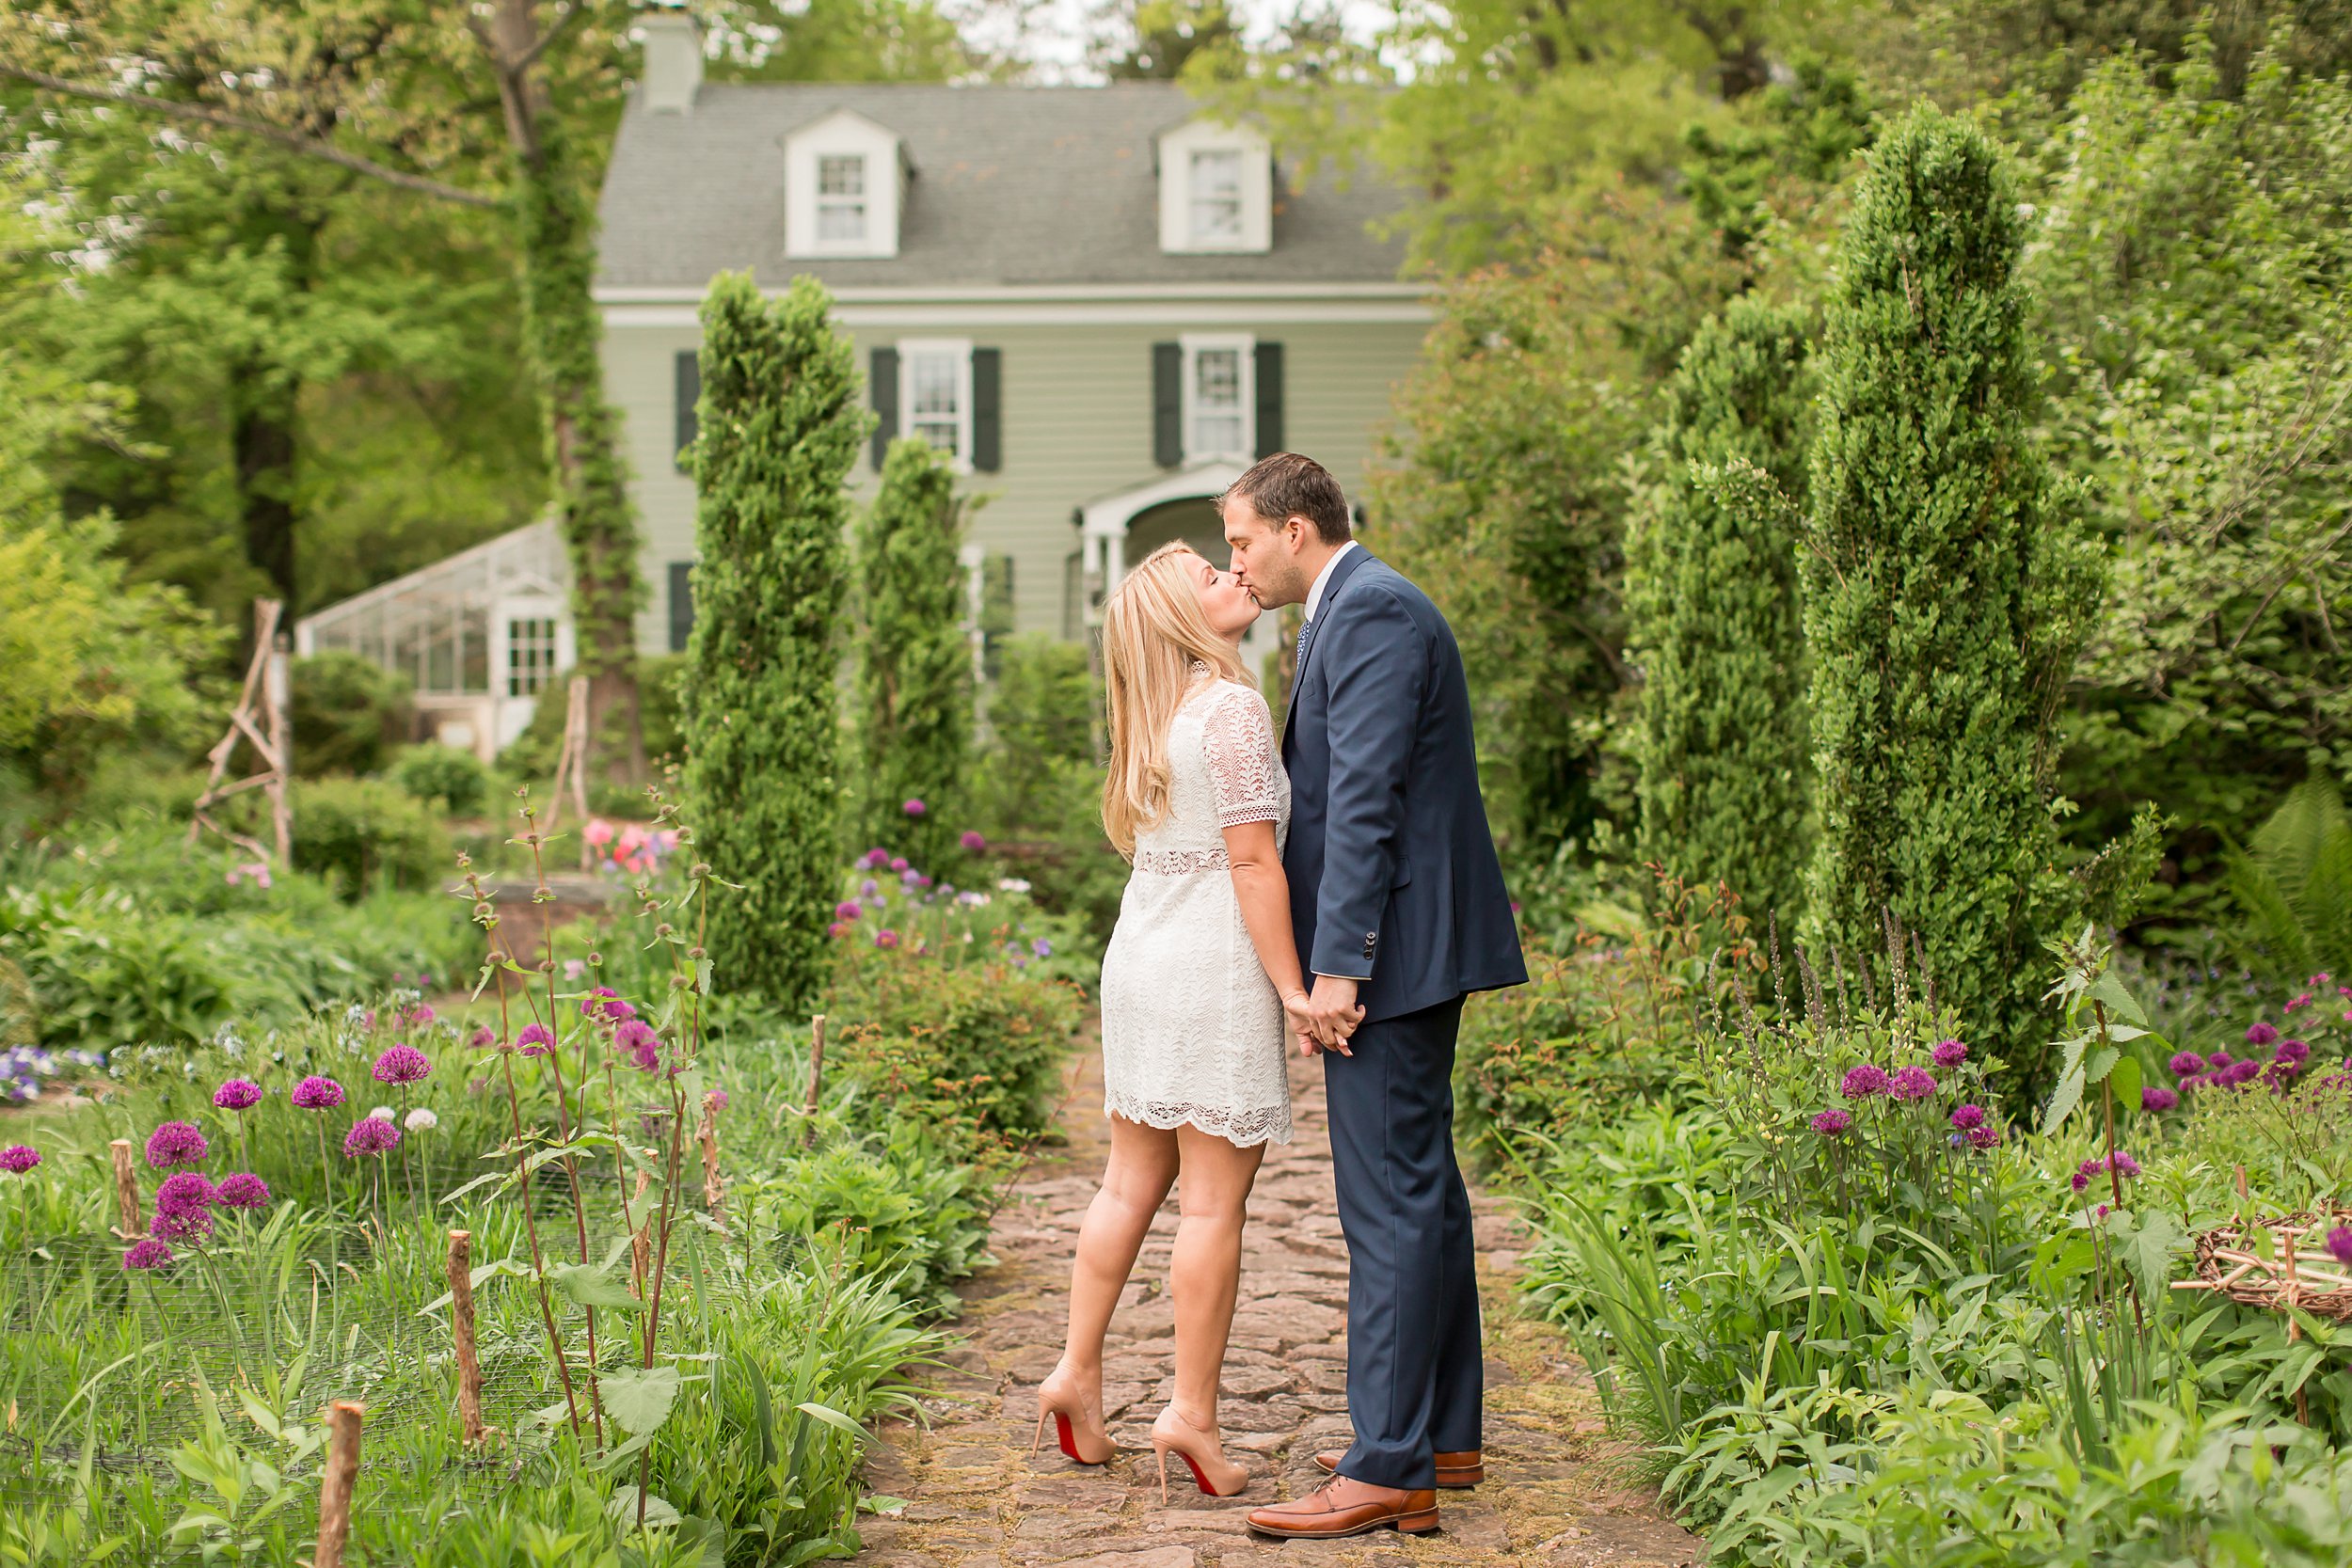 Romantic engagement photo at Willowwood Arboretum | Photo by Idalia Photography